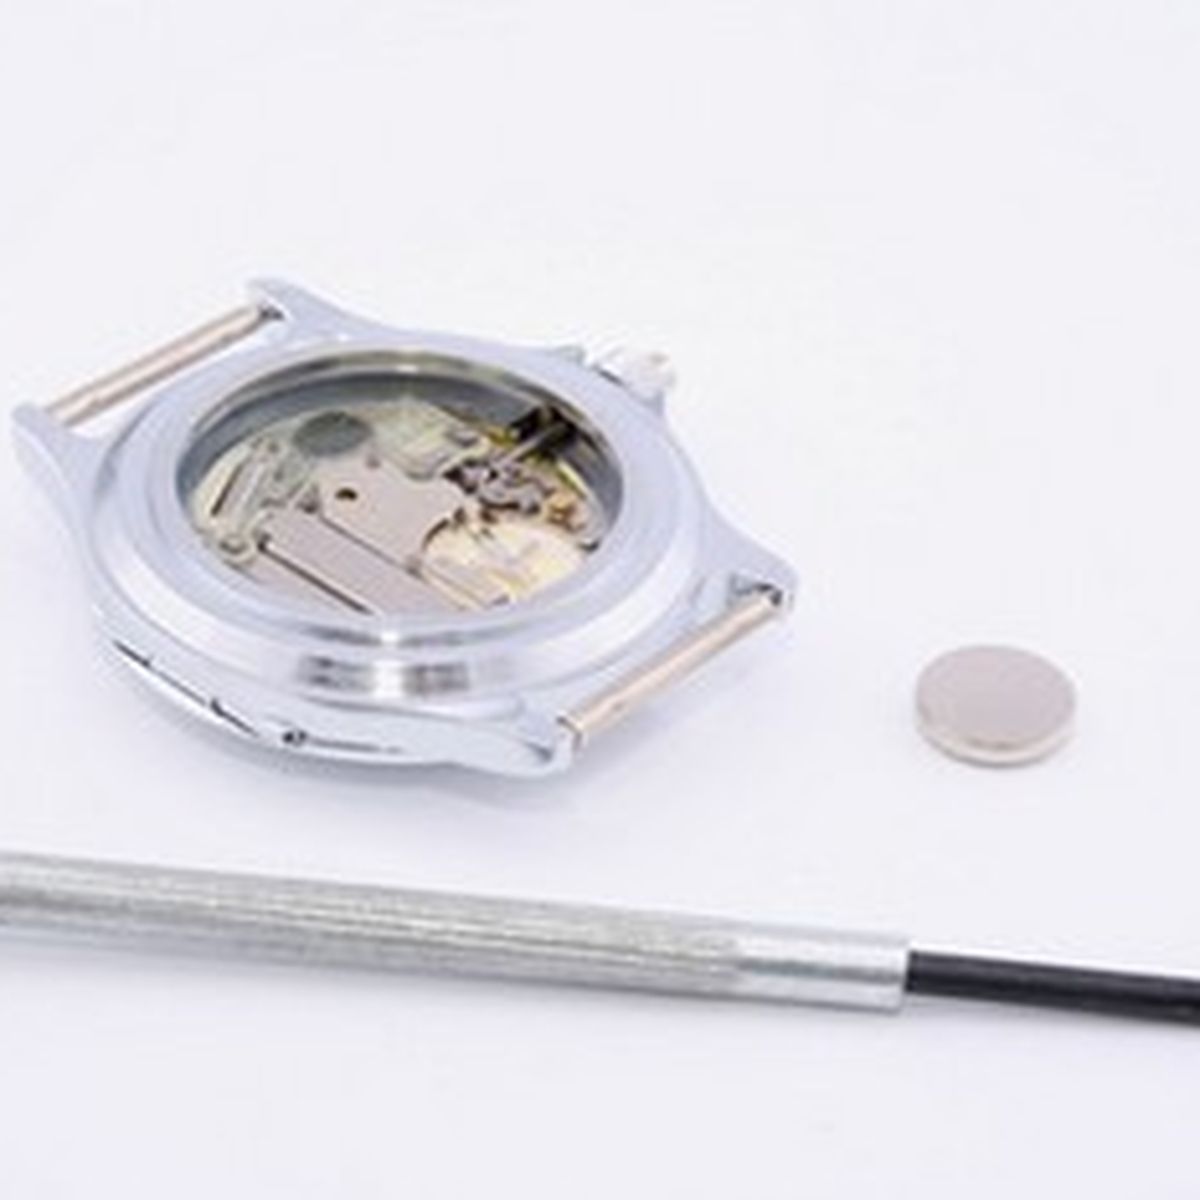 Watch battery replacement | Fix watch battery, change in Boston